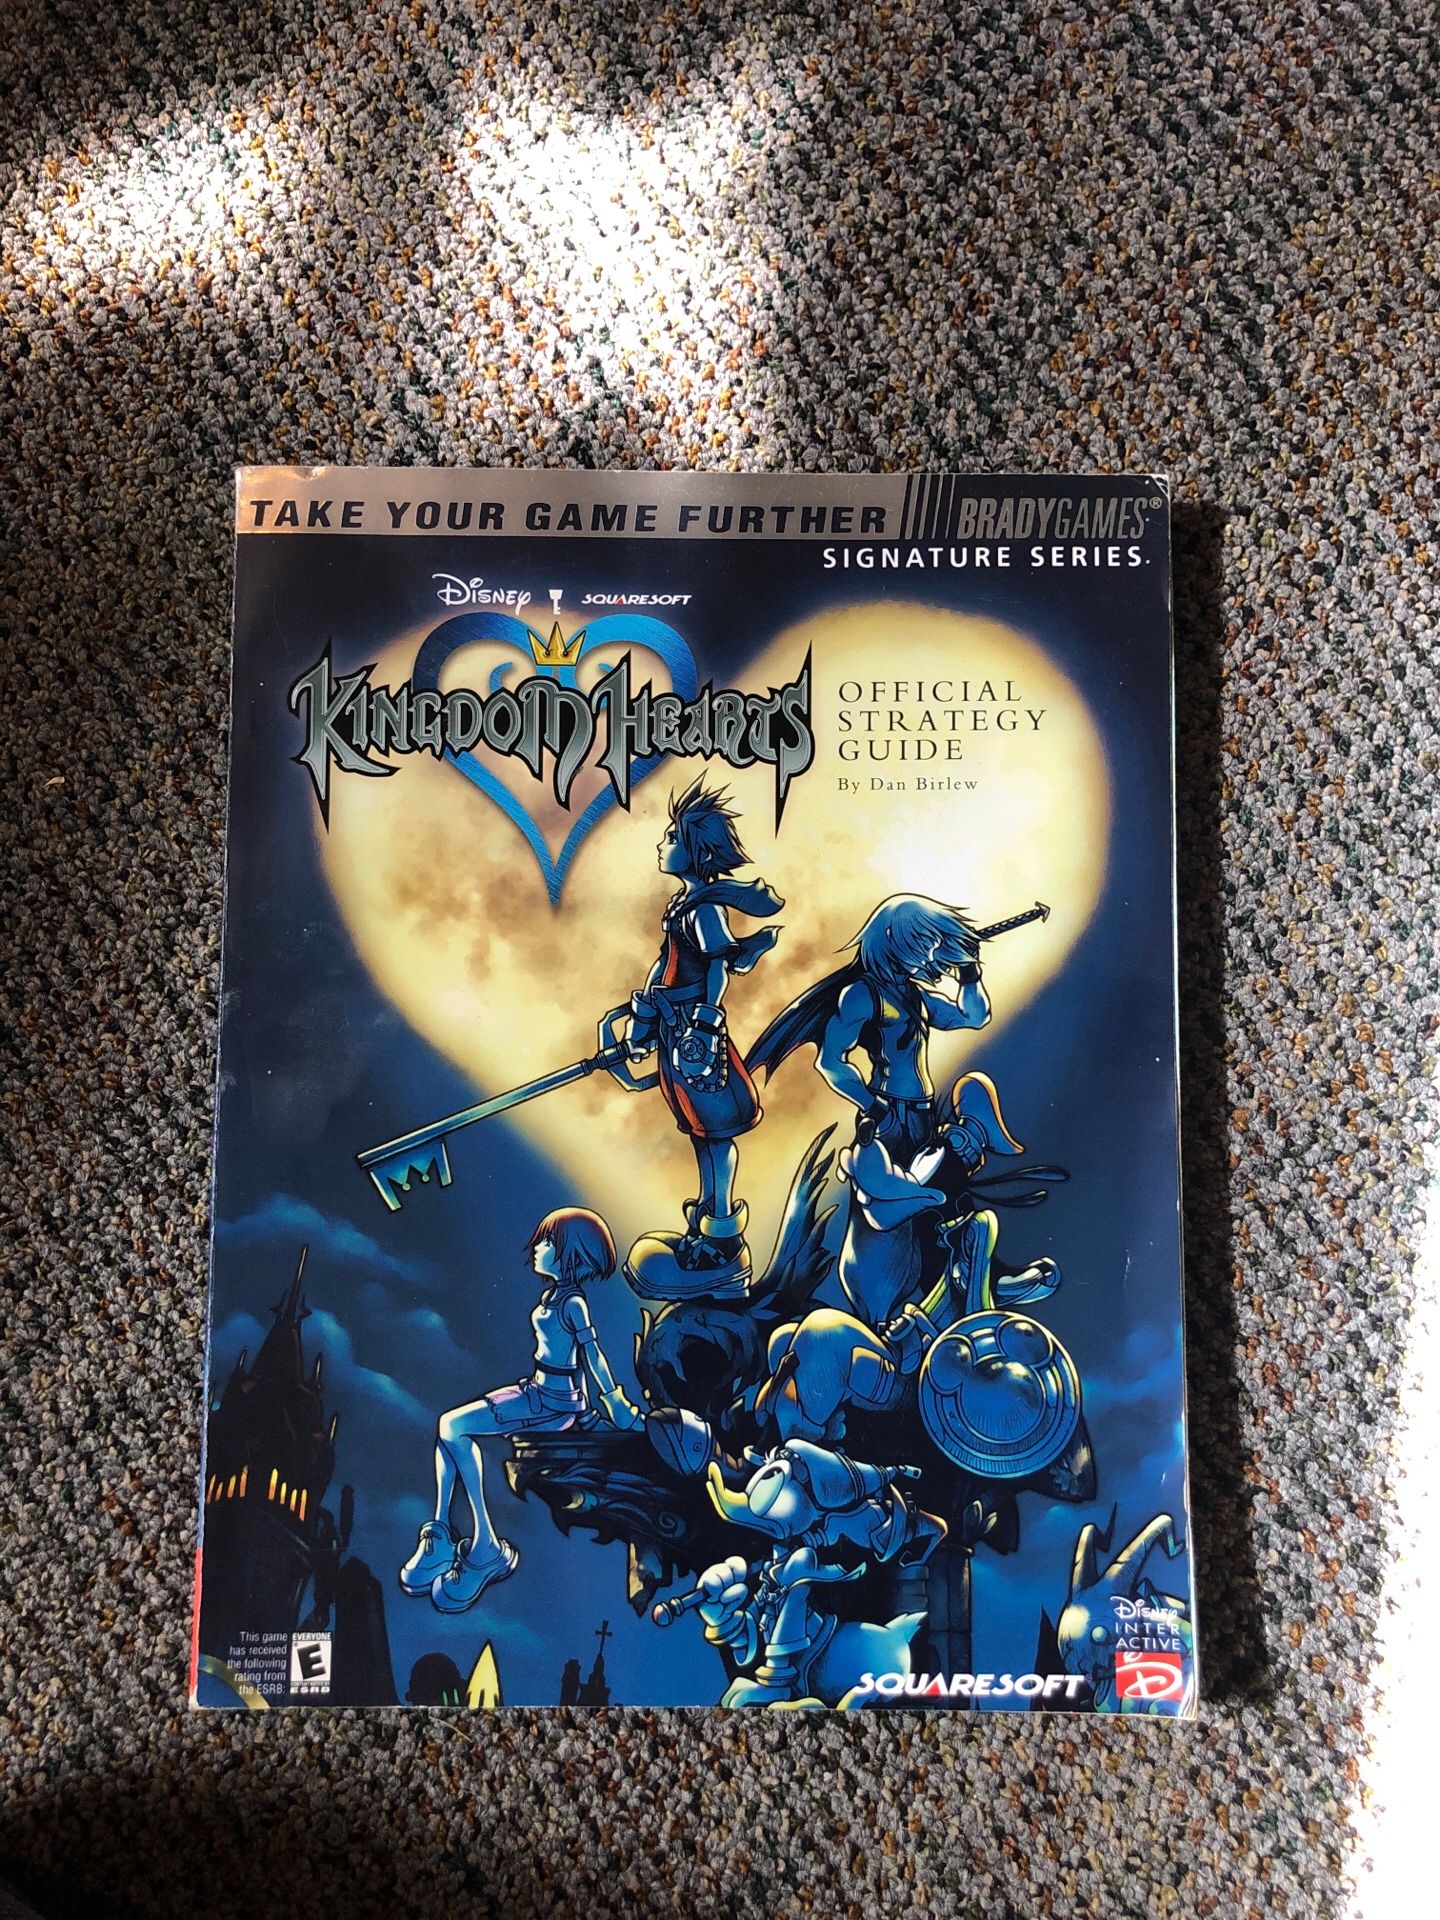 Kingdom Hearts 1 Brady Games Strategy Guide Disney Video Game